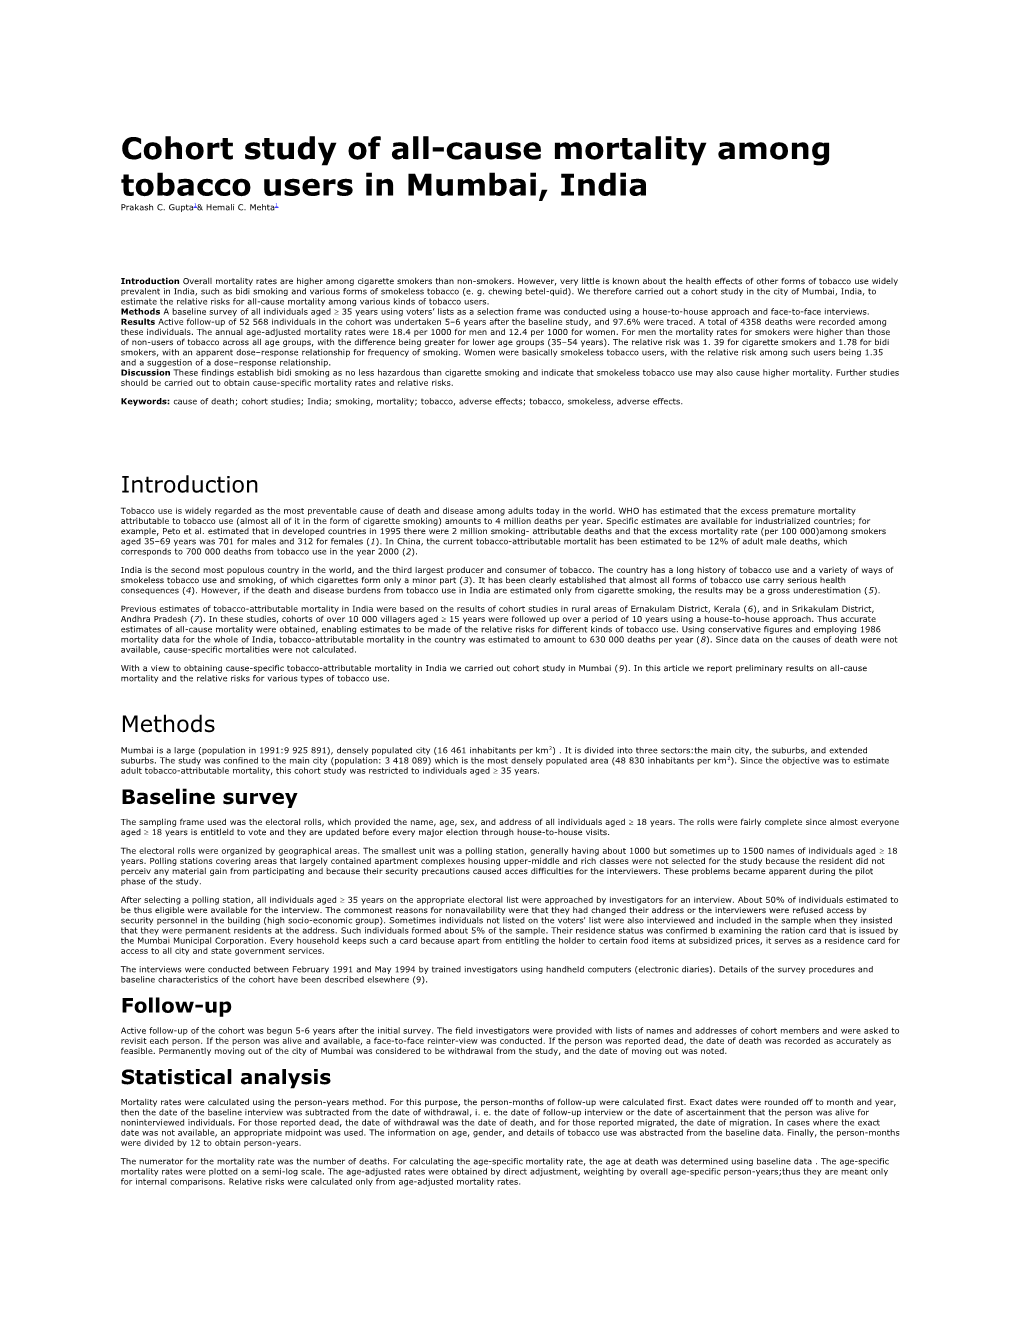 Cohort Study of All-Cause Mortality Among Tobacco Users in Mumbai, India Prakash C. Gupta1&